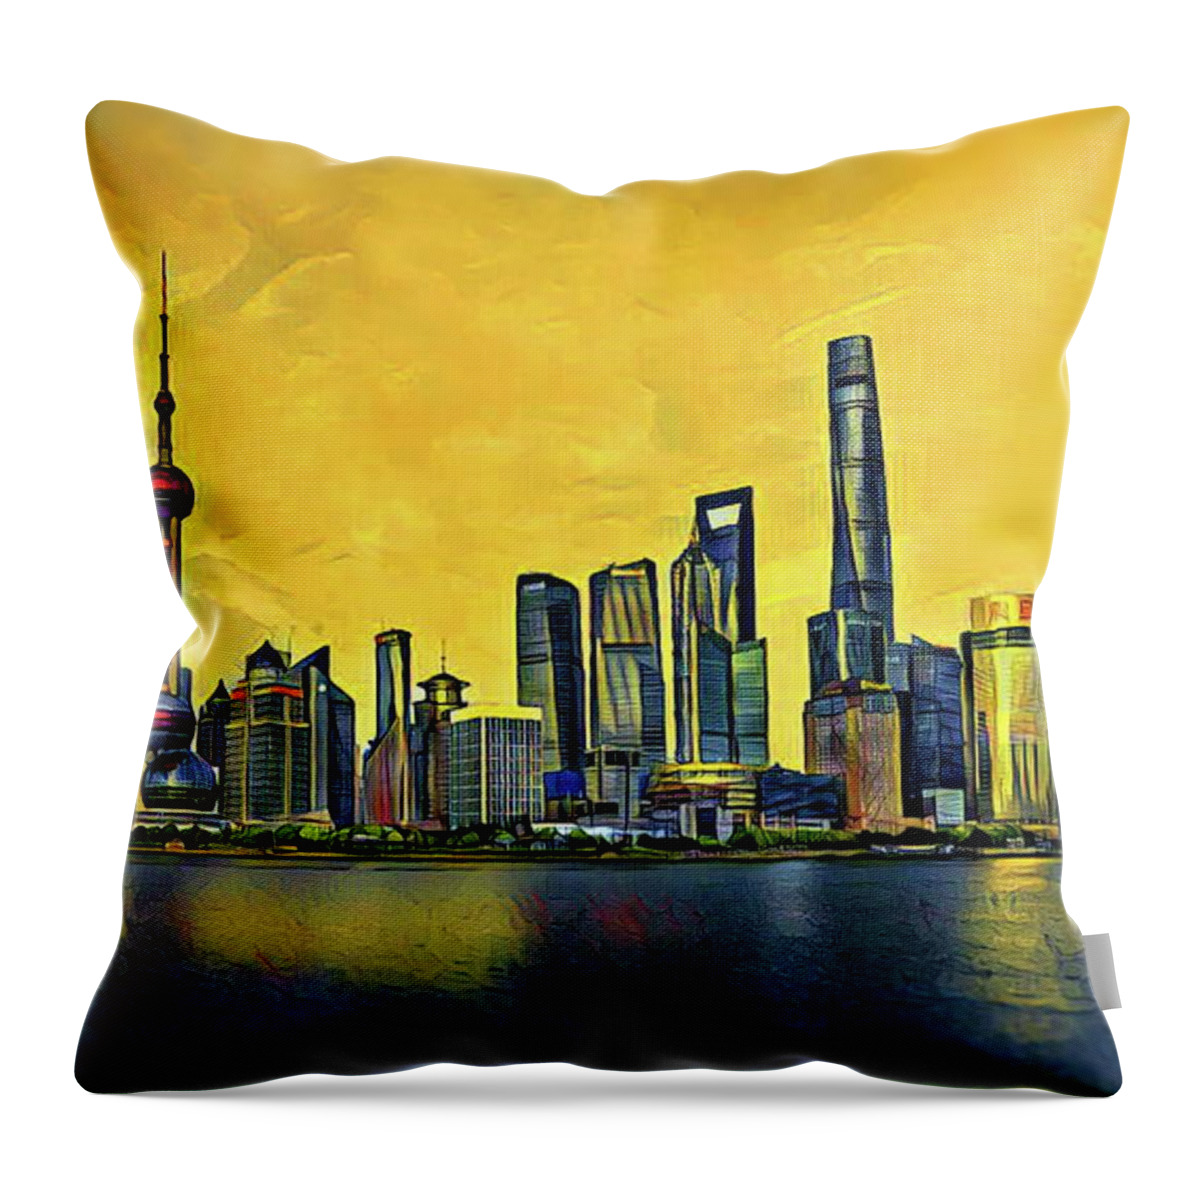 Skyline Throw Pillow featuring the digital art Shanghai Skyline - China by Russ Harris